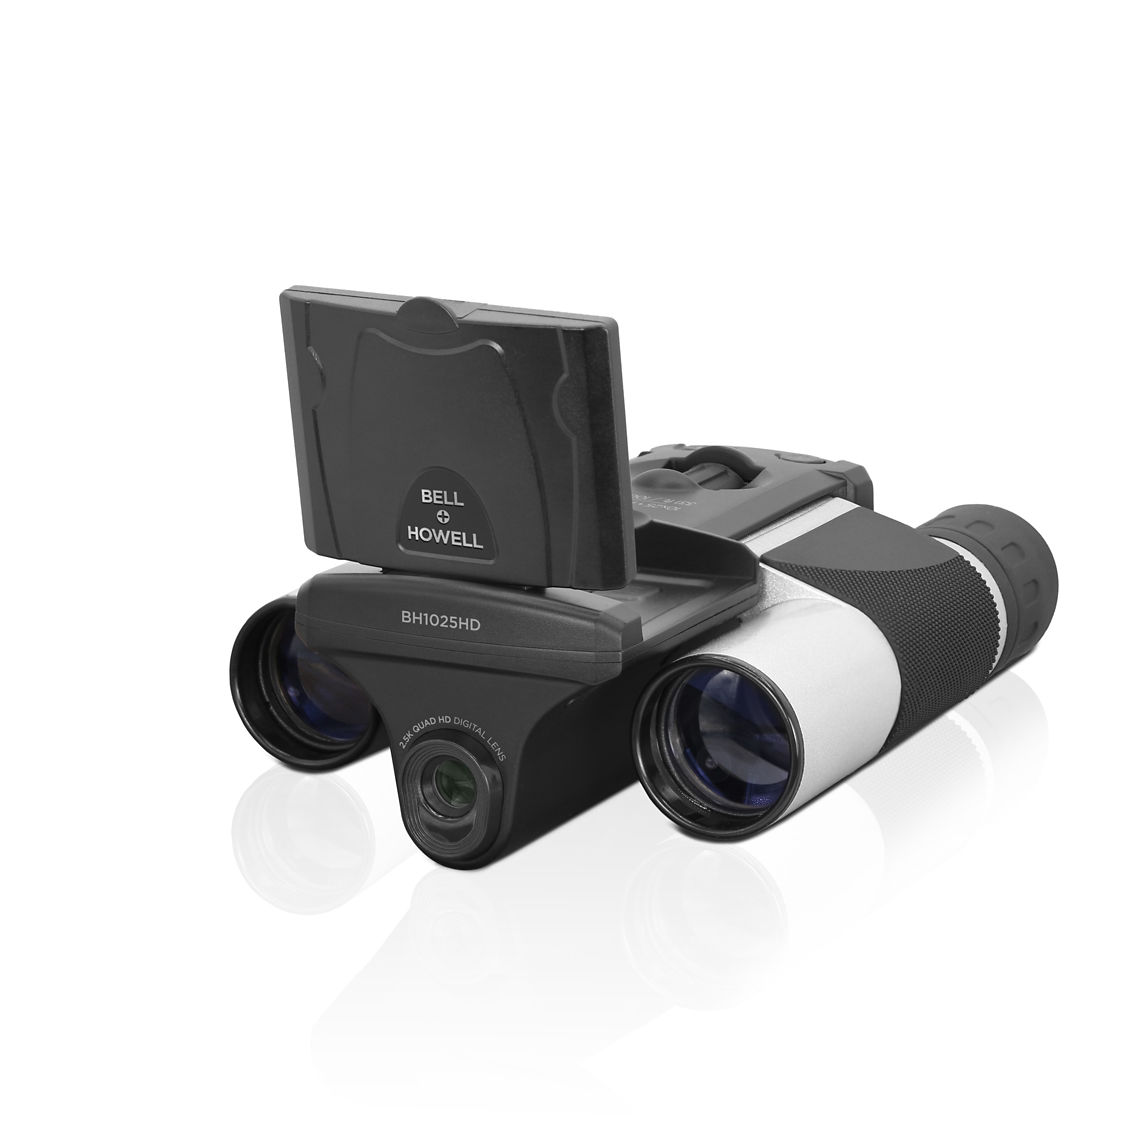 BELL+HOWELL BH1025HD 10x25 Binoculars w/2.5K Quad HD Video Camera - Image 2 of 5